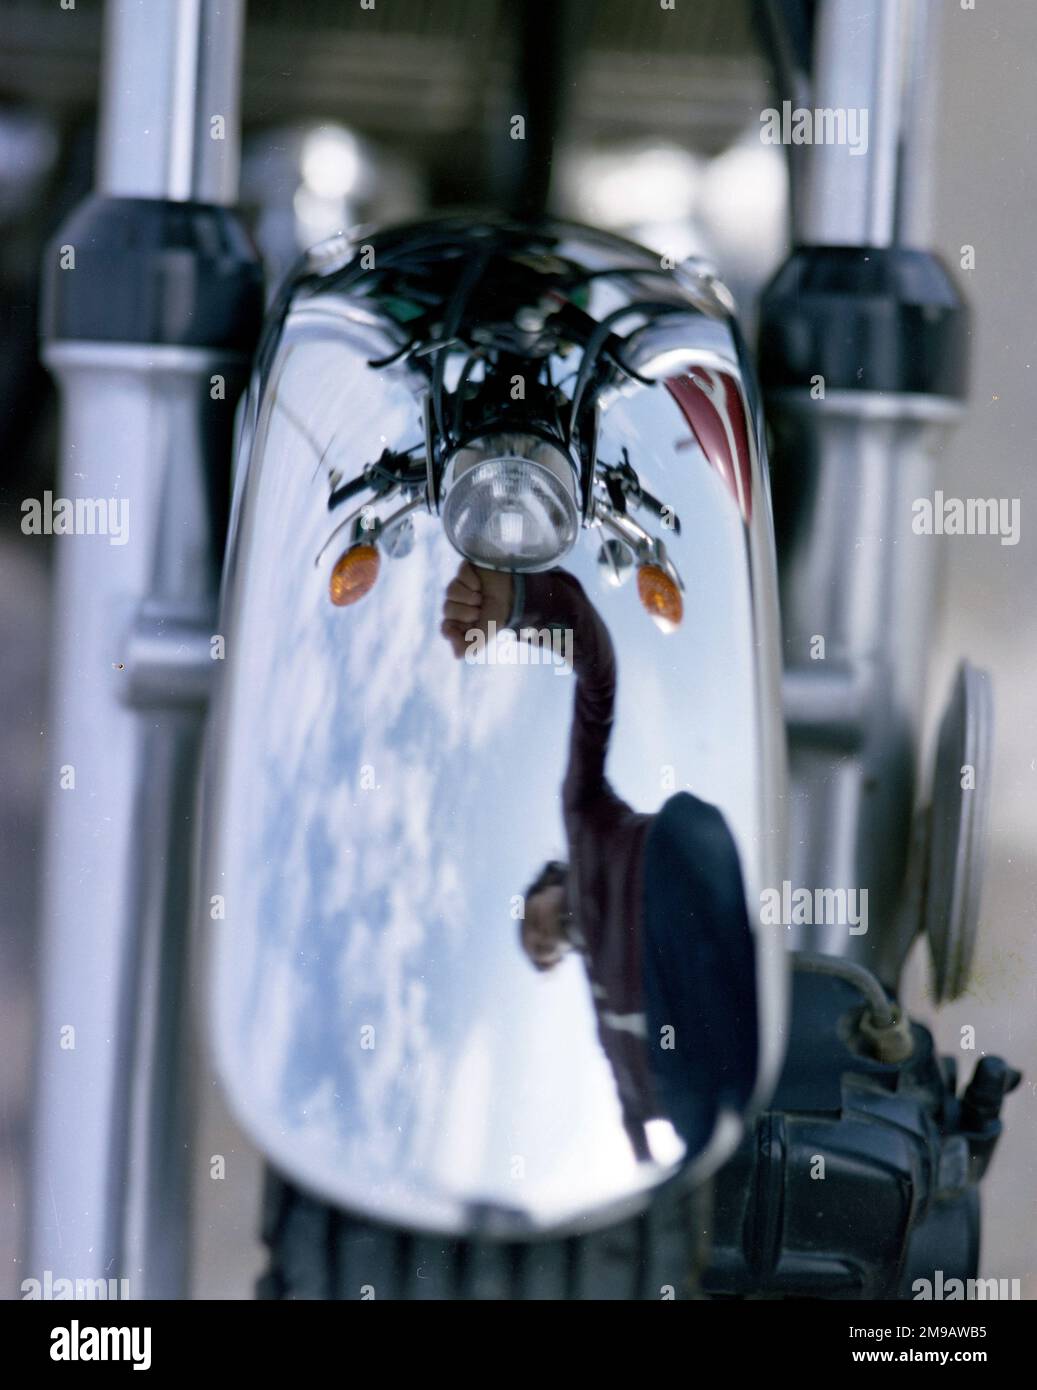 Kawasaki Z 650 motorbike, reflection in the front mudguard. Stock Photo